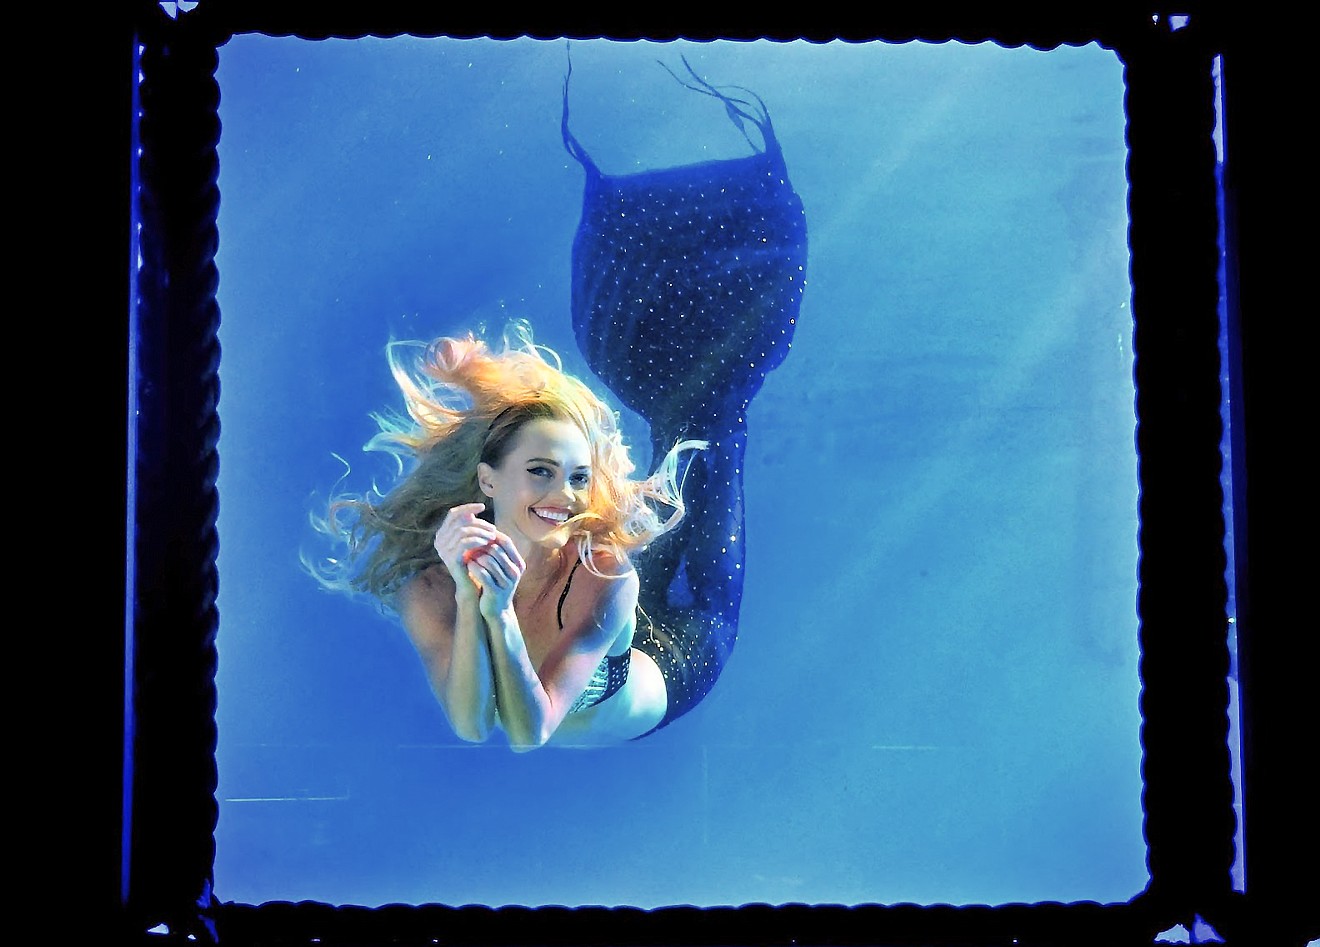 Whitney Fair in full mermaid regalia at the Wreck Bar in Fort Lauderdale